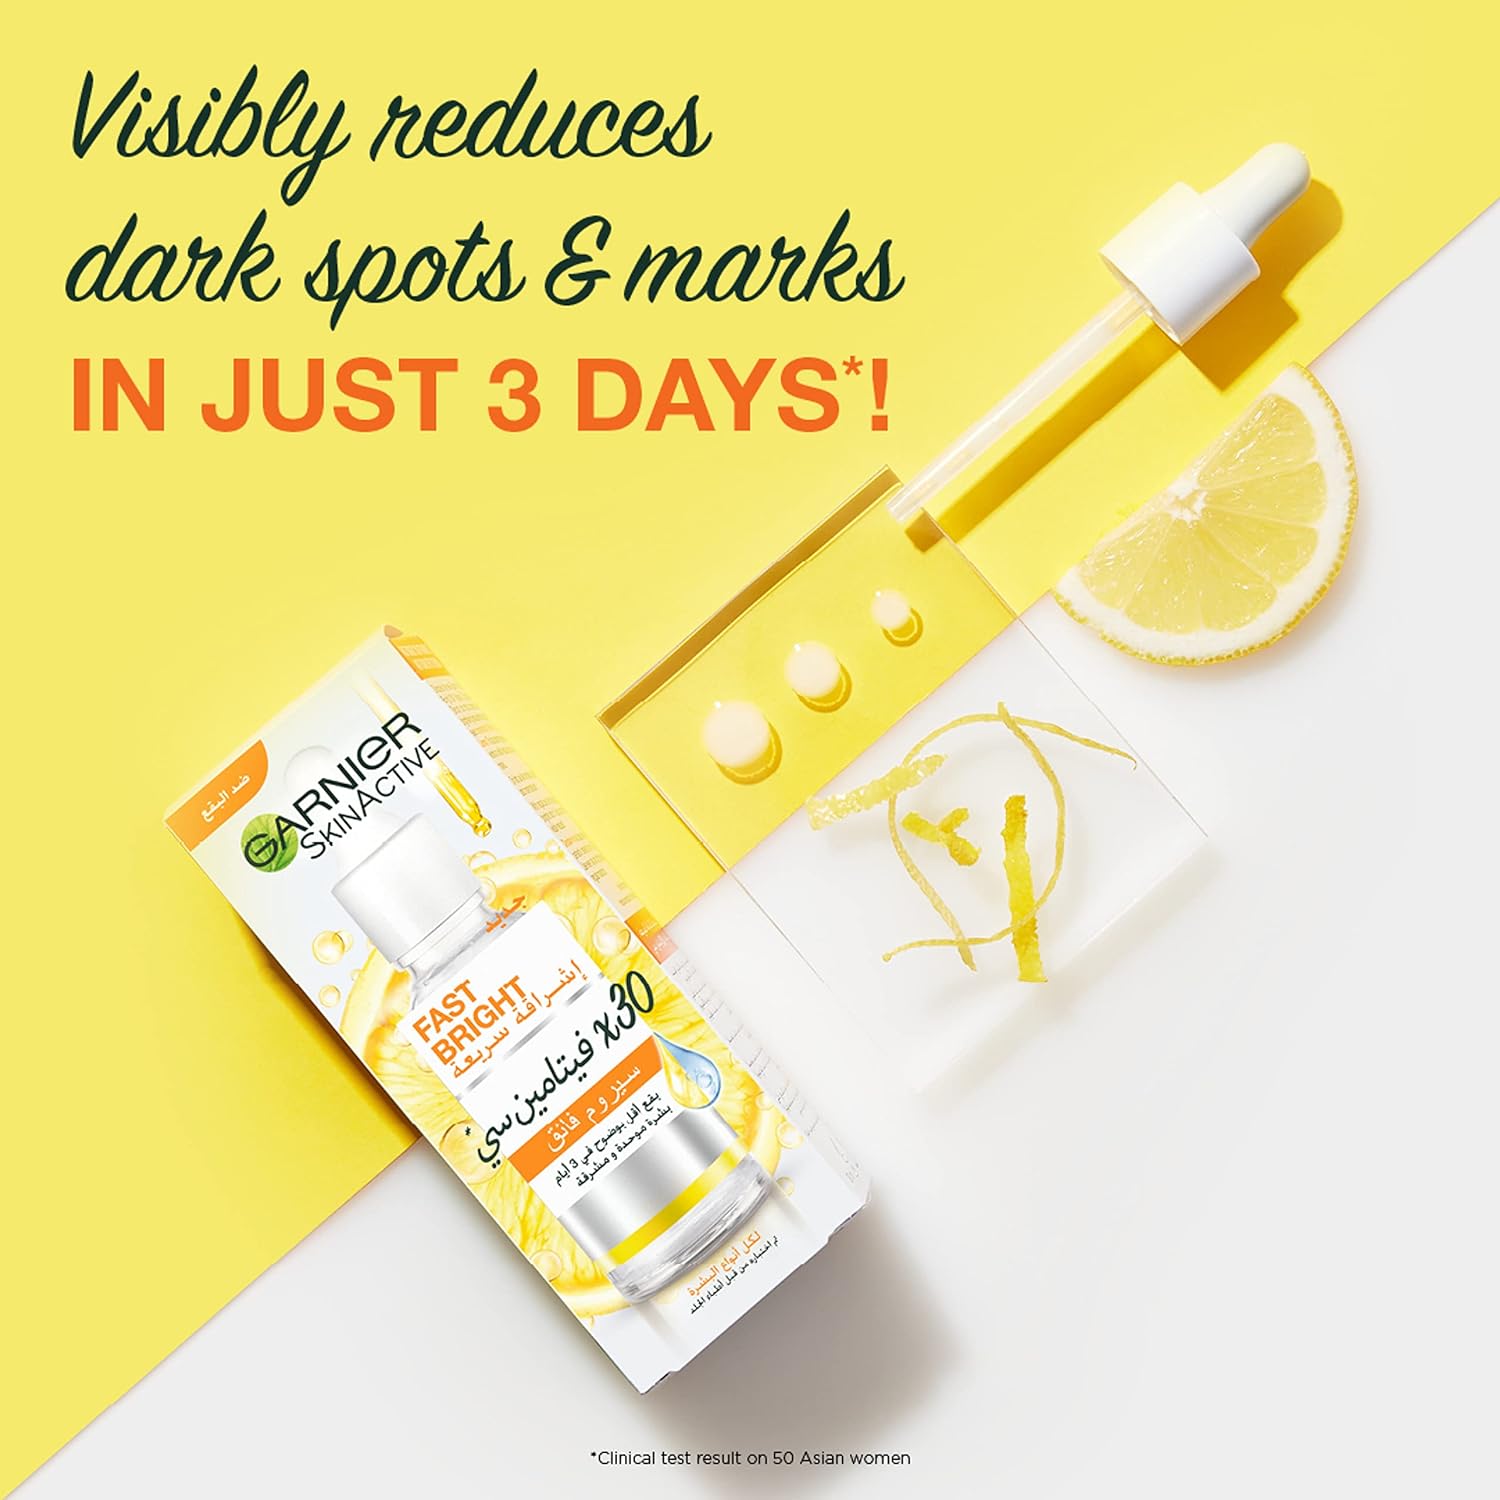 Garnier Skinactive Fast Bright 30X Vitamin C Anti Dark Spot Serum, 30 Ml